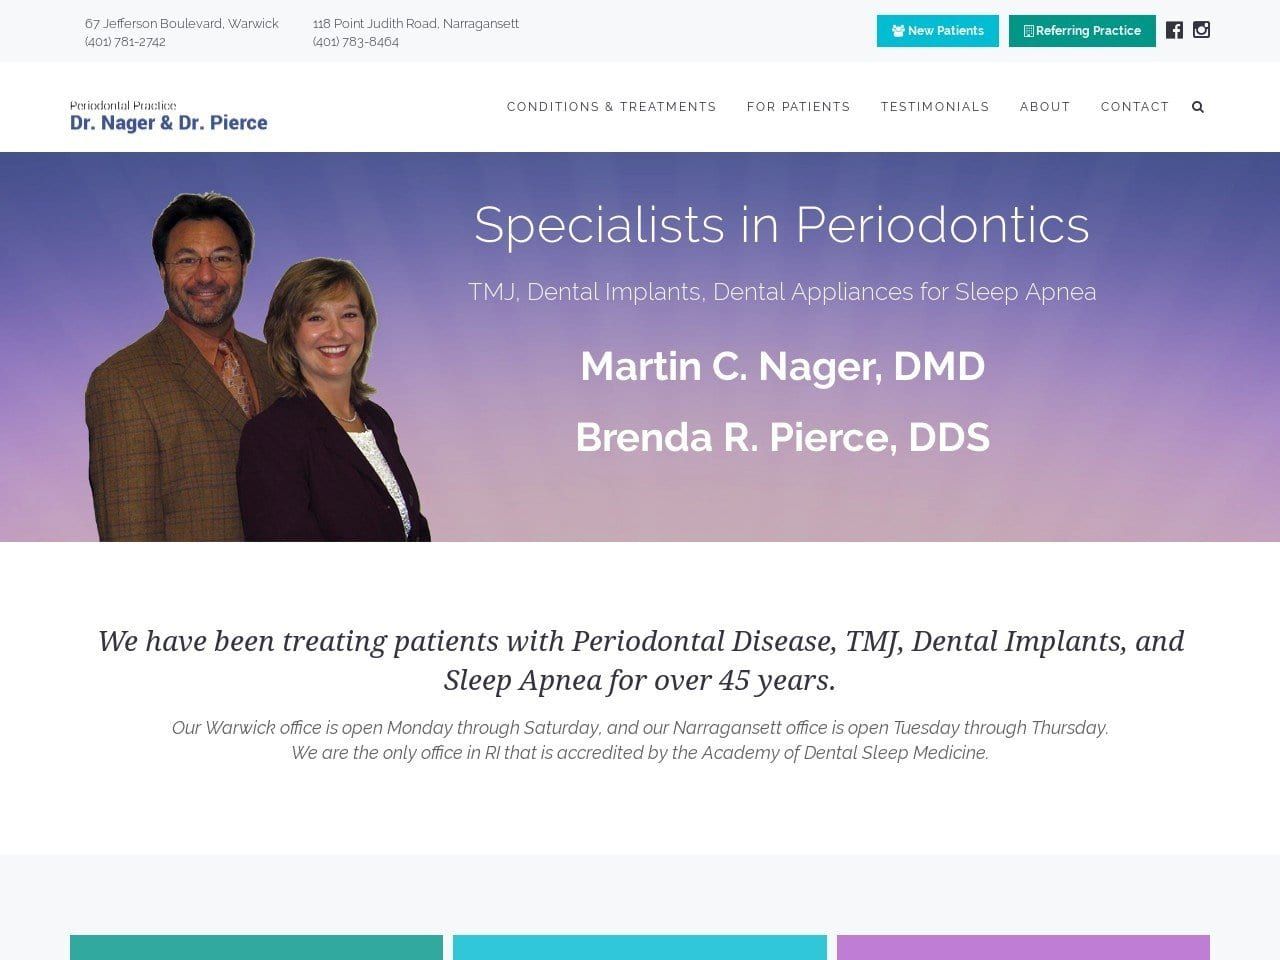 Drs. Ross Nager & Pierce Website Screenshot from riperio.com